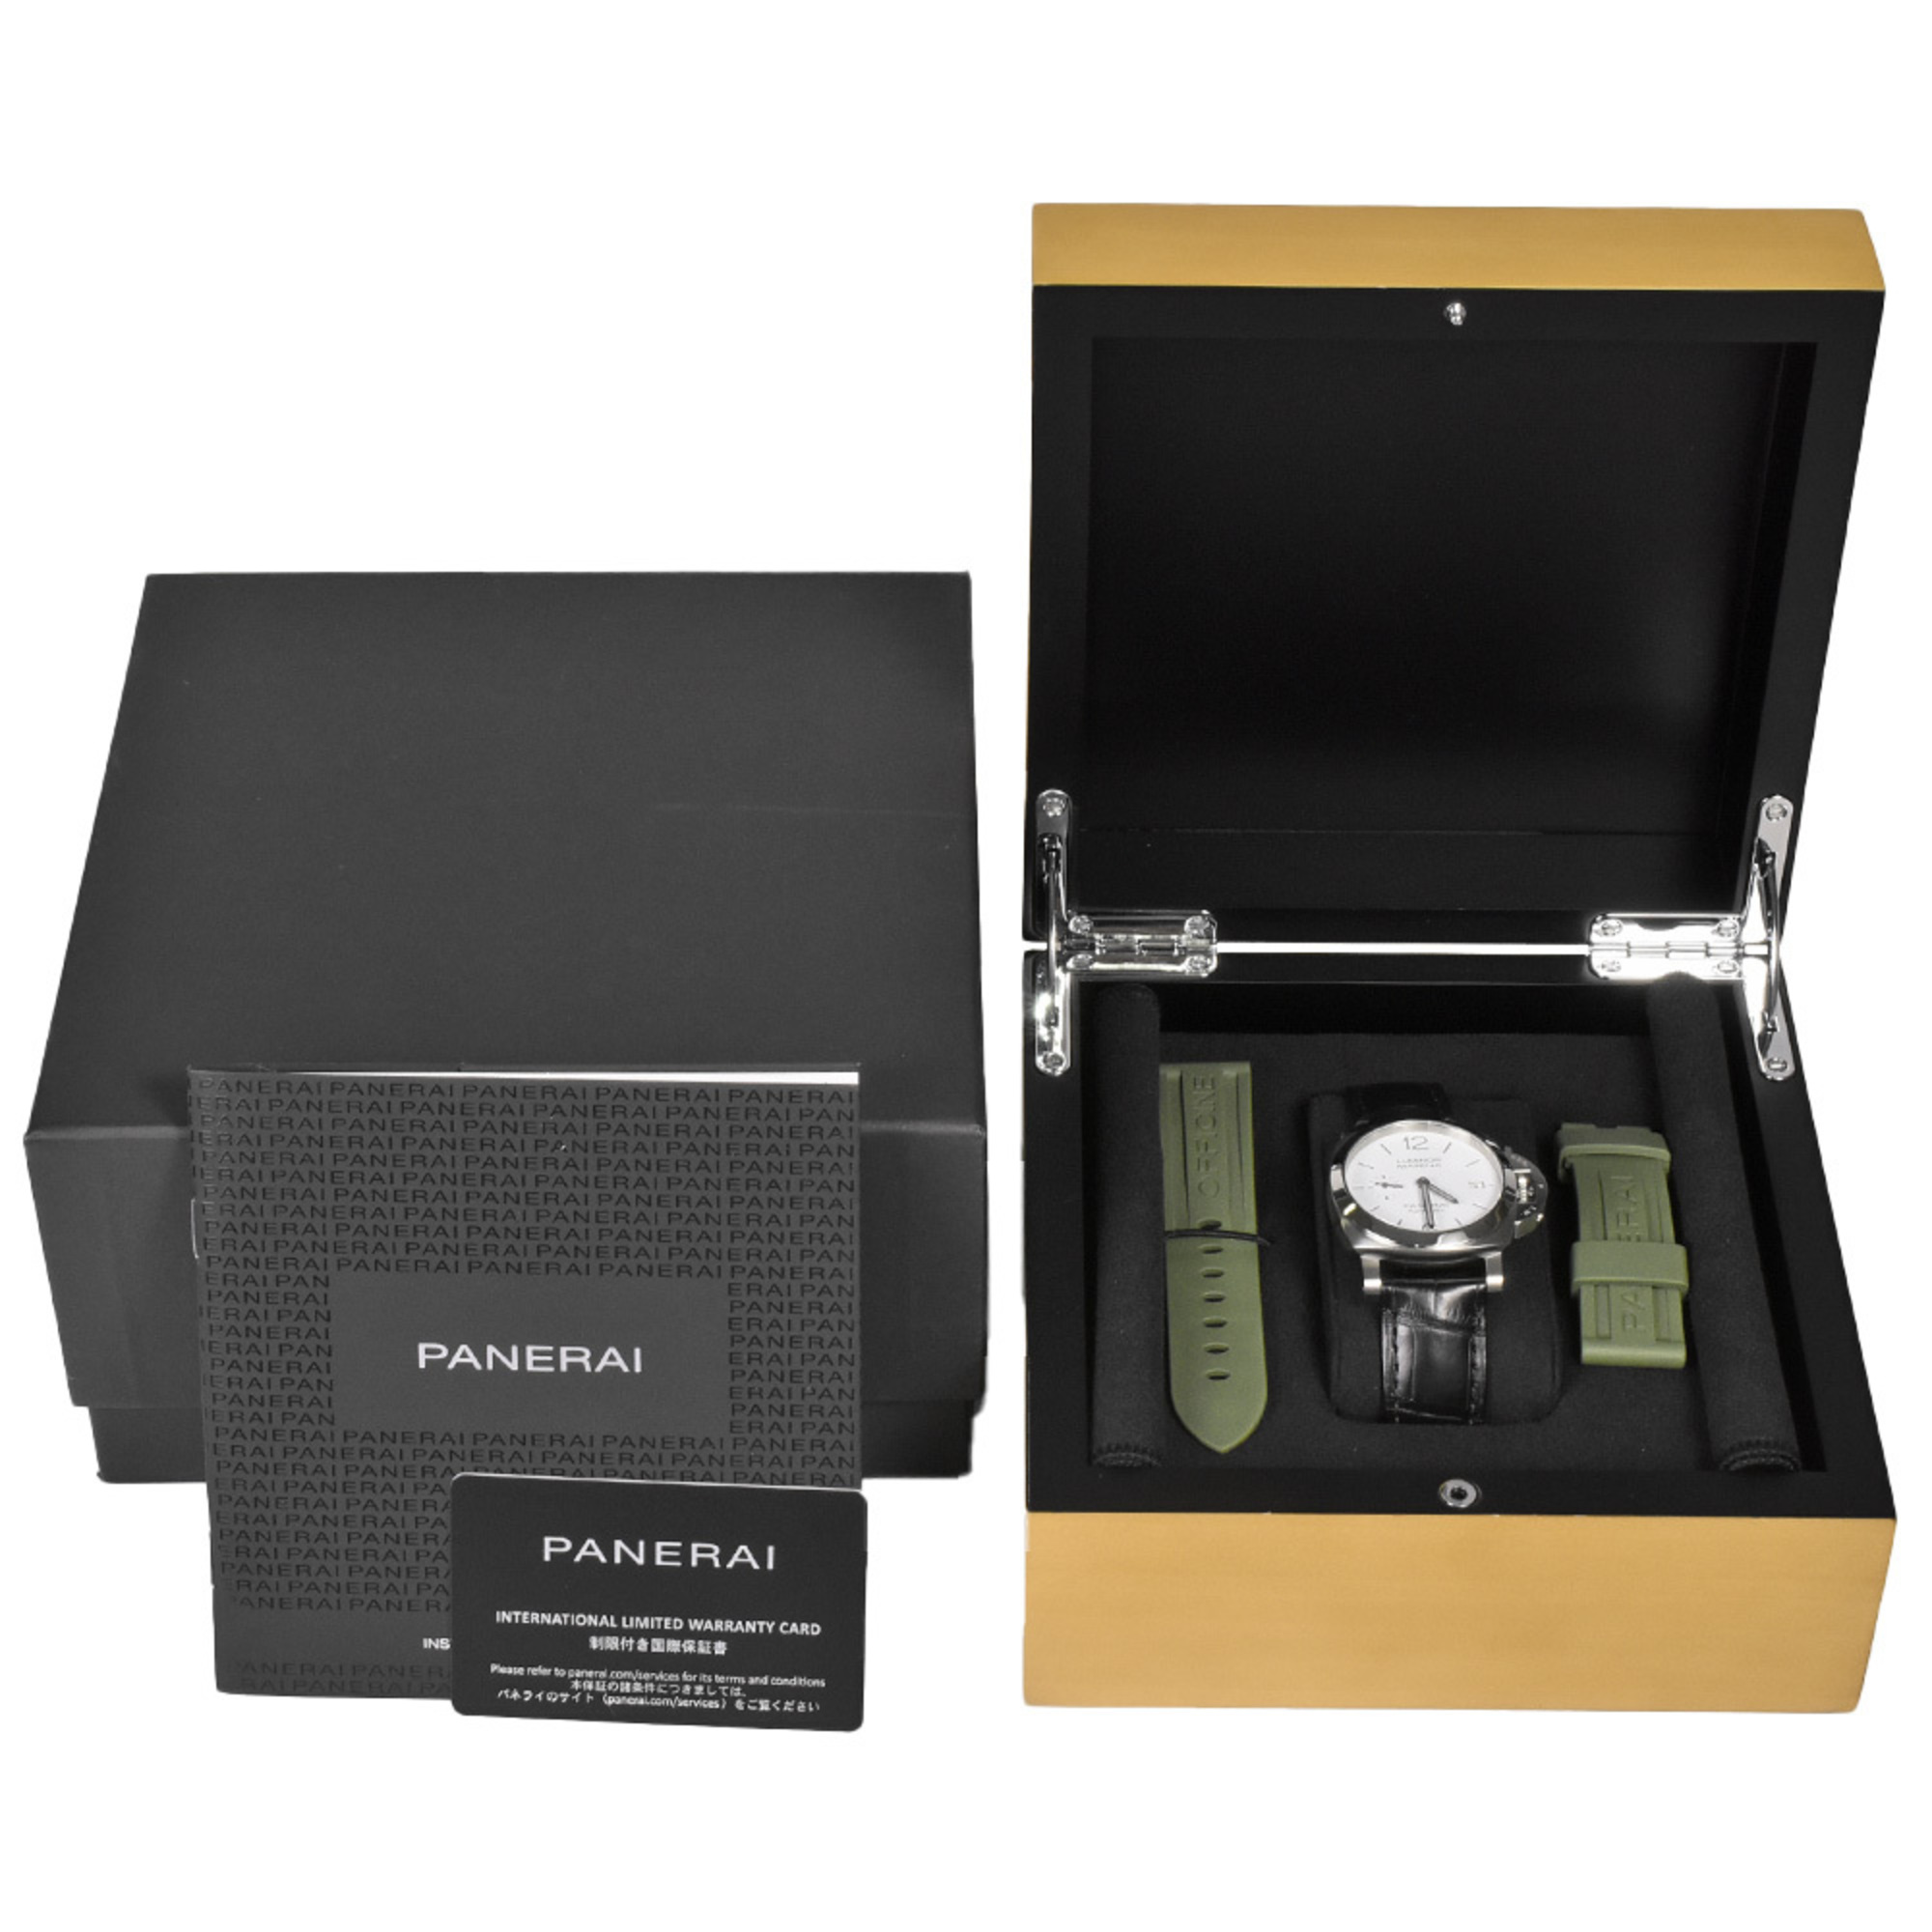 Panerai PANERAI PAM01371 Luminor Quaranta Y number (manufactured) watch automatic winding white dial date small seconds men's